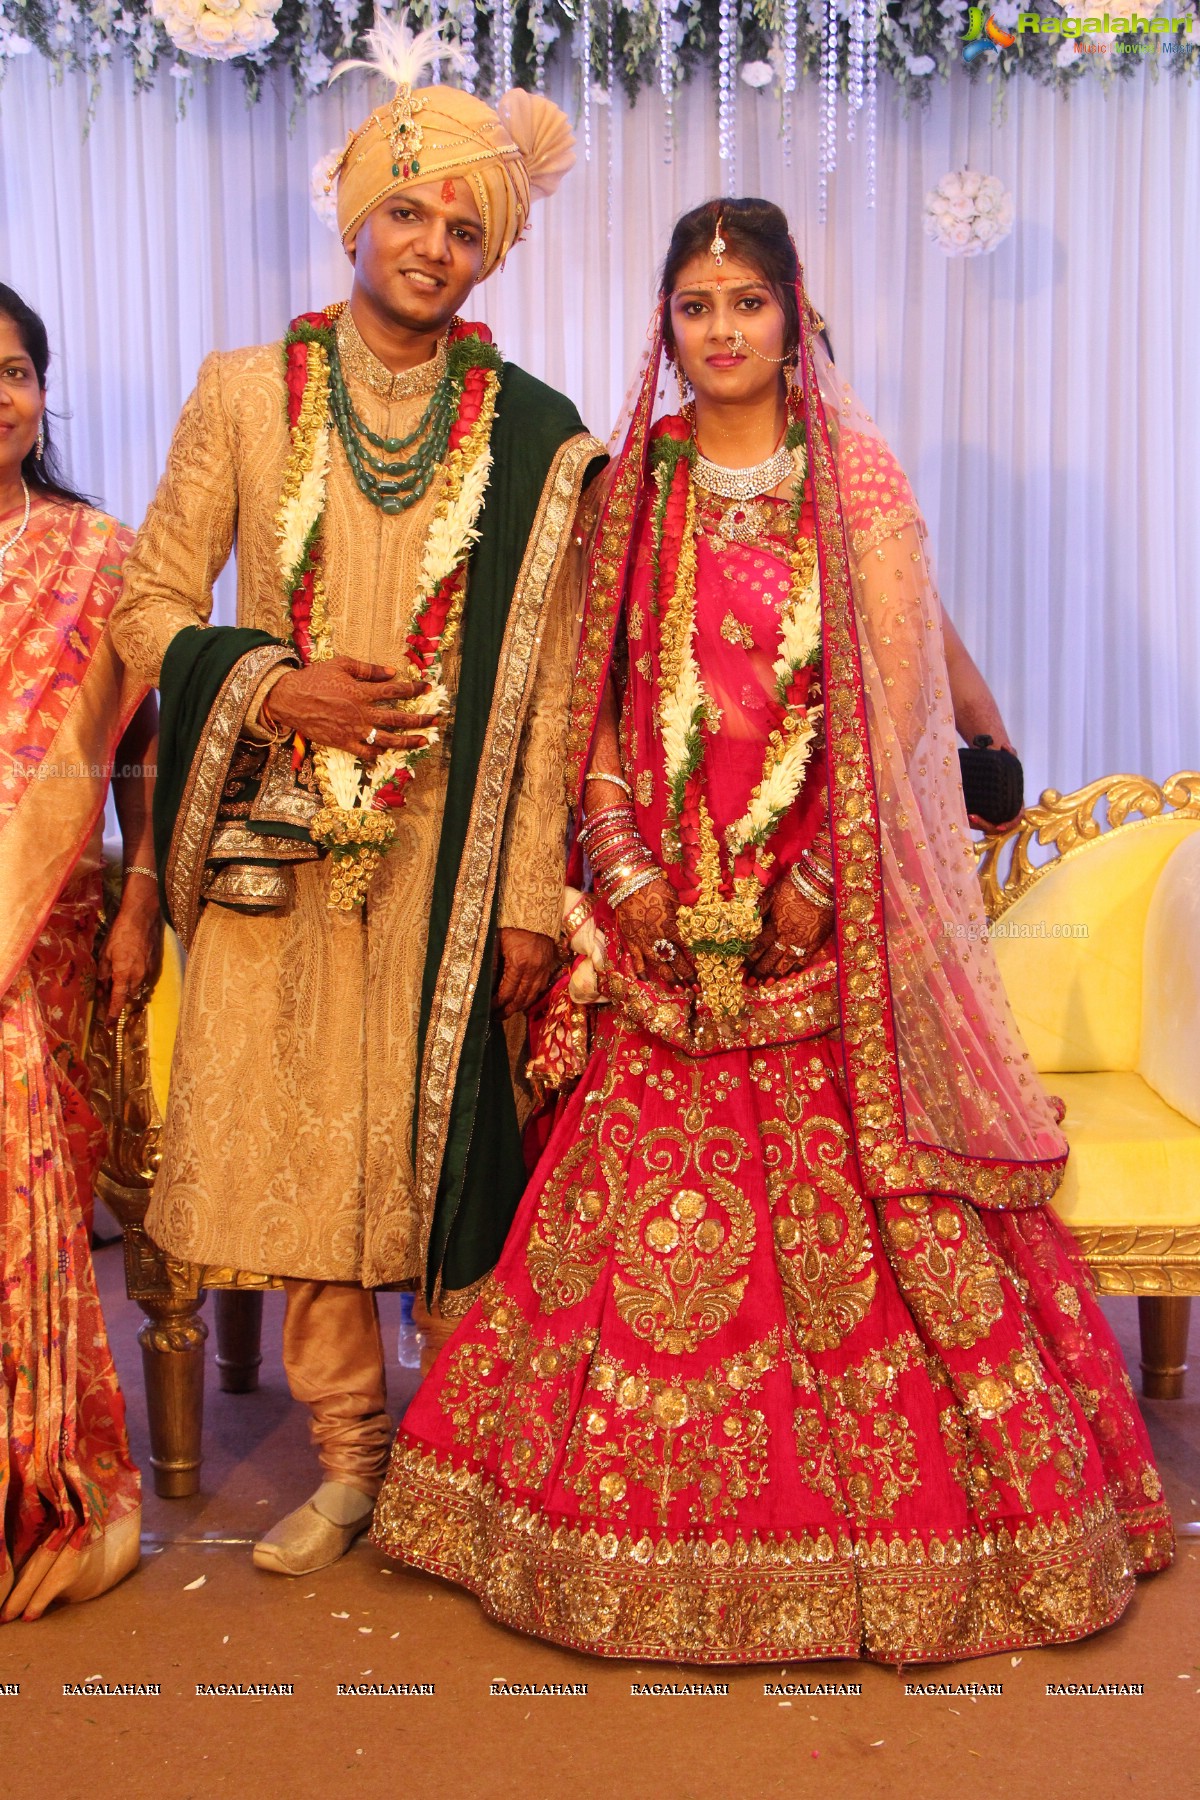 Grand Wedding Ceremony of Prateek Tibrewala-Kanupriya